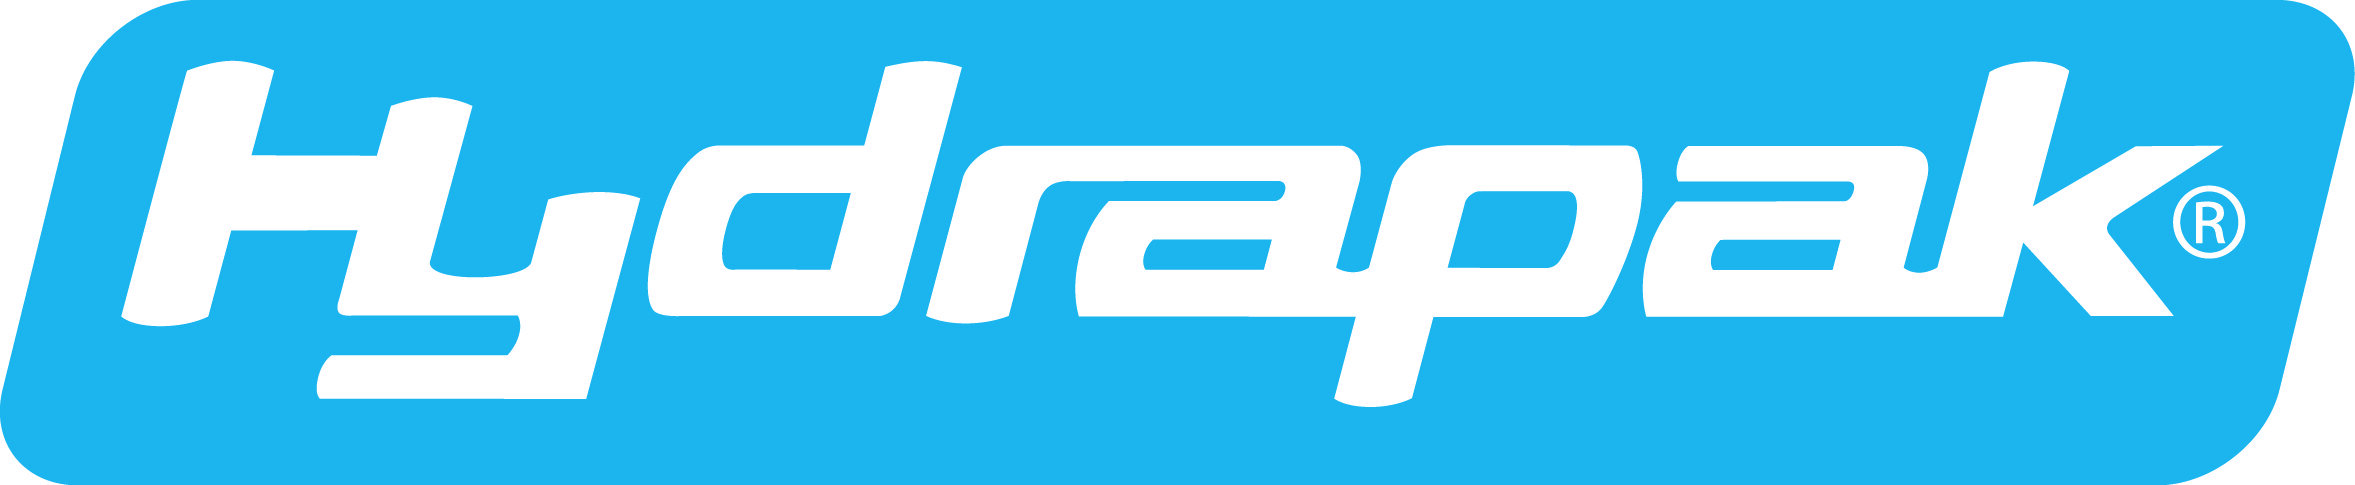 HYDRAPAK LnxOAmr logo marki